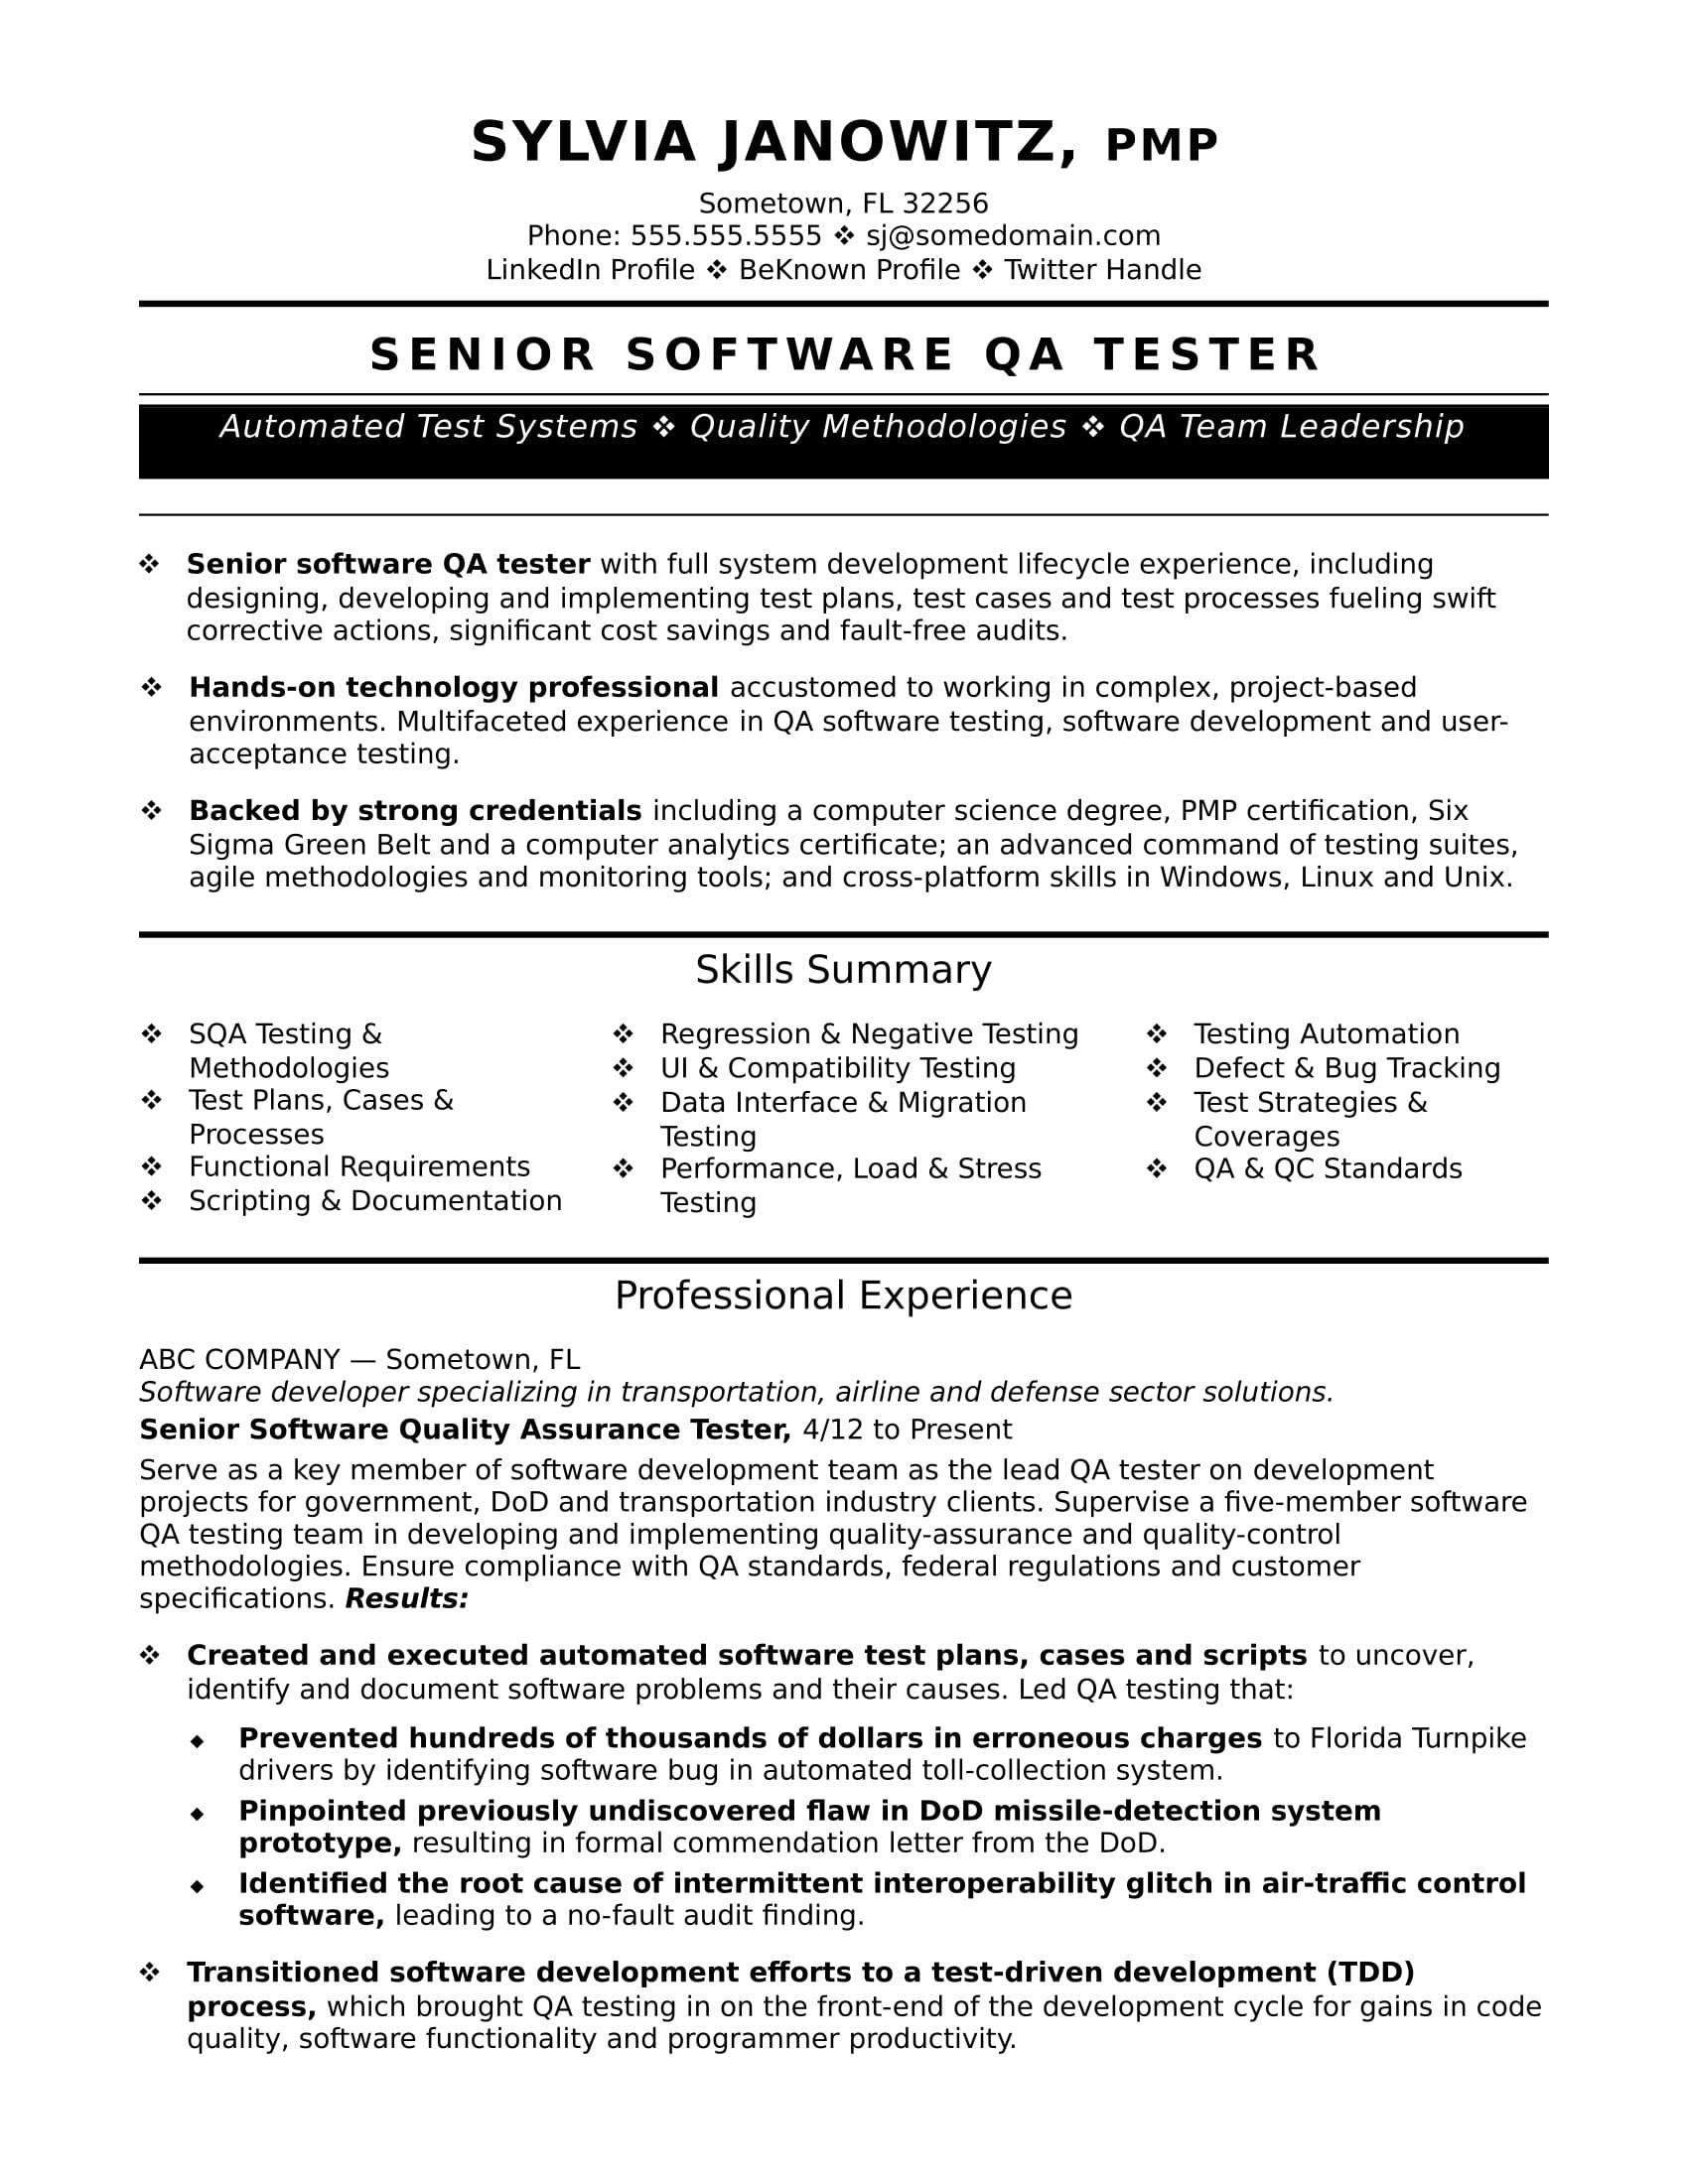 Software Testing Resume Samples for 7 Years Experience Experienced Qa software Tester Resume Sample Monster.com